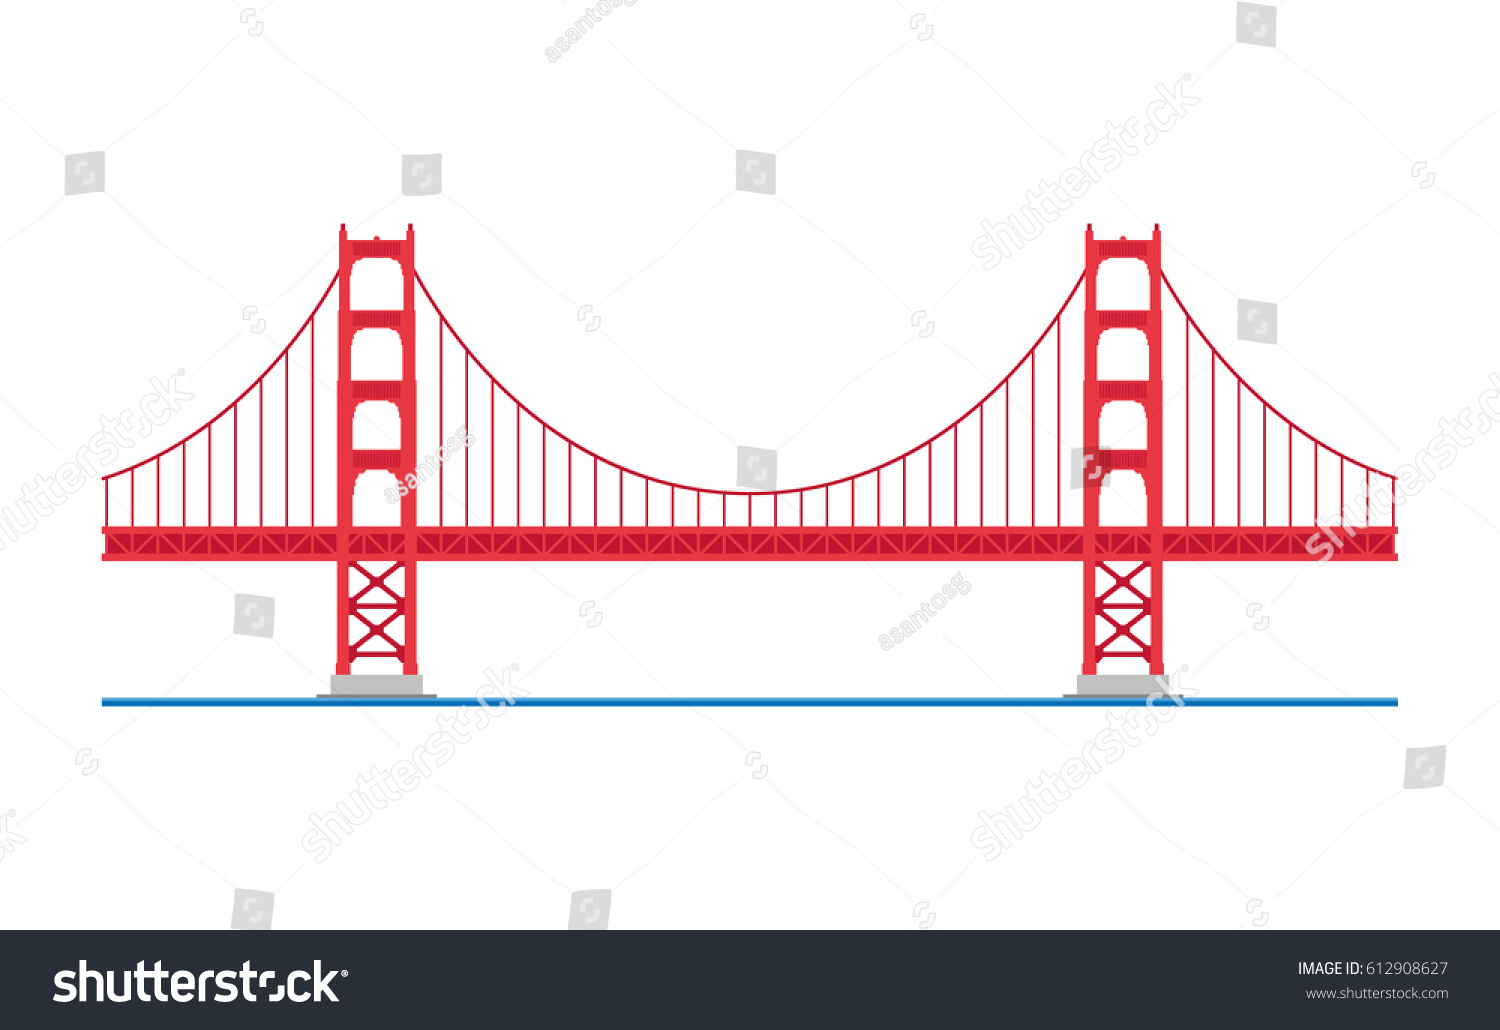 735 Golden Gate Bridge Drawing Images, Stock Photos & Vectors ...